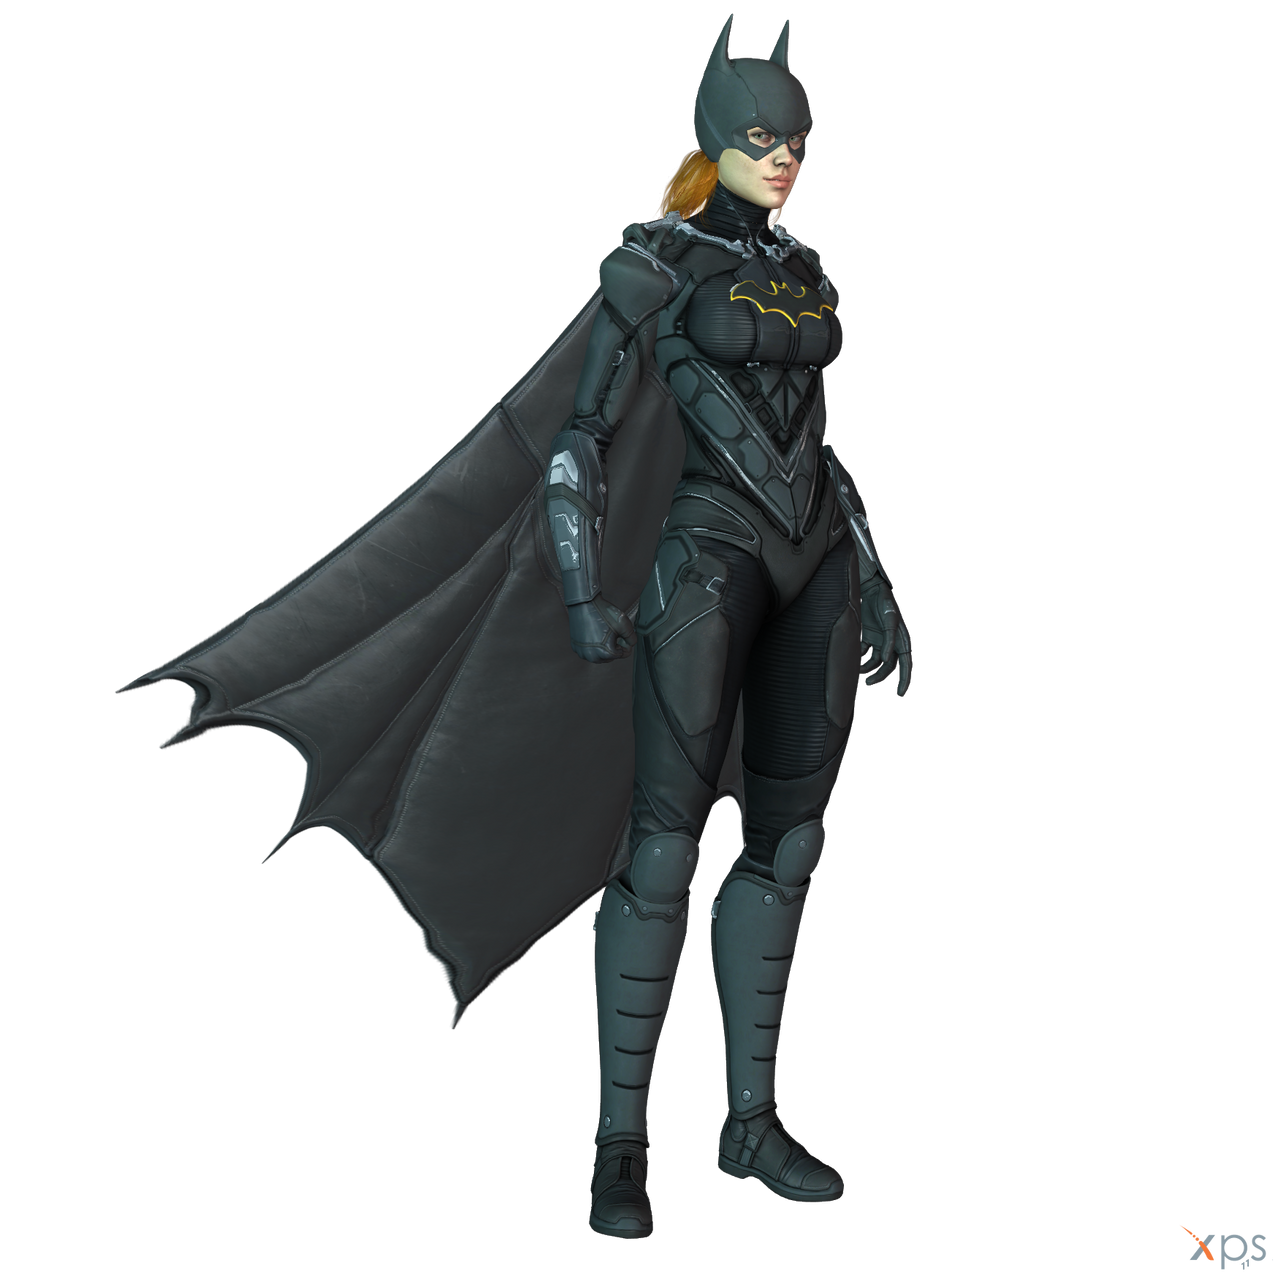 Gotham Knights Shares New Batgirl-Centric Trailer - Noisy Pixel